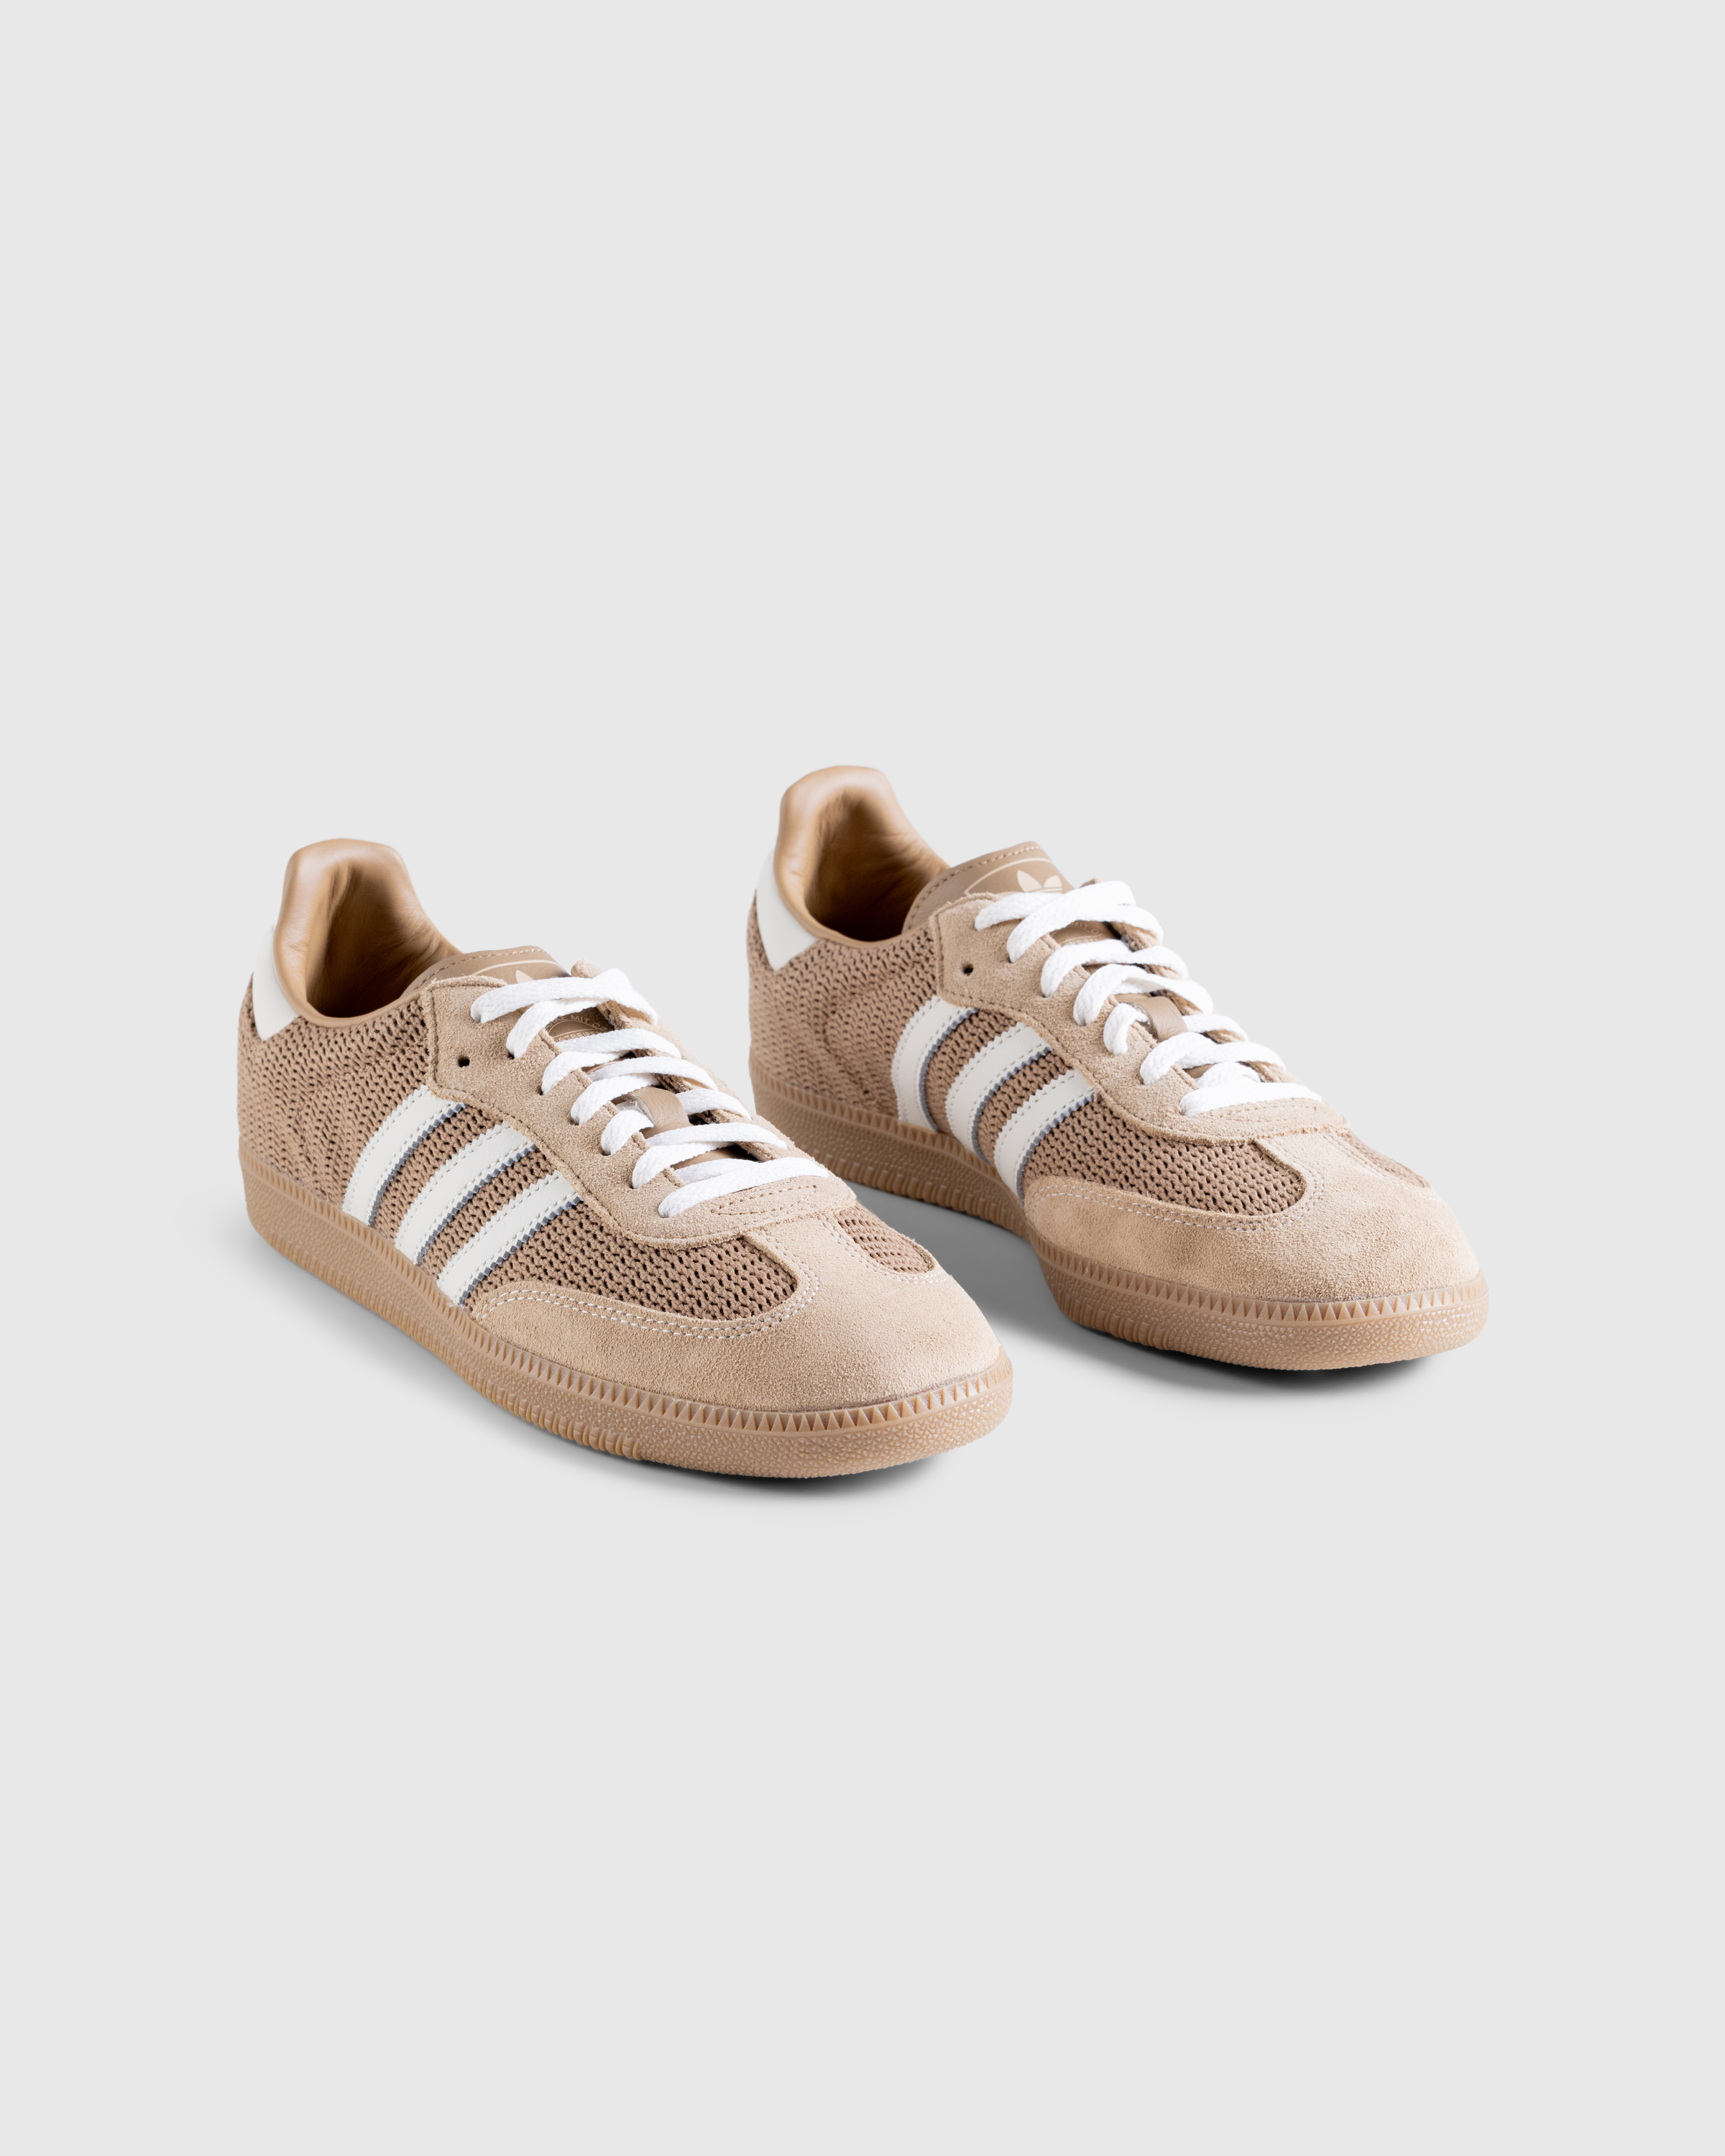 Adidas – Samba OG Cardboard - Sneakers - Brown - Image 3